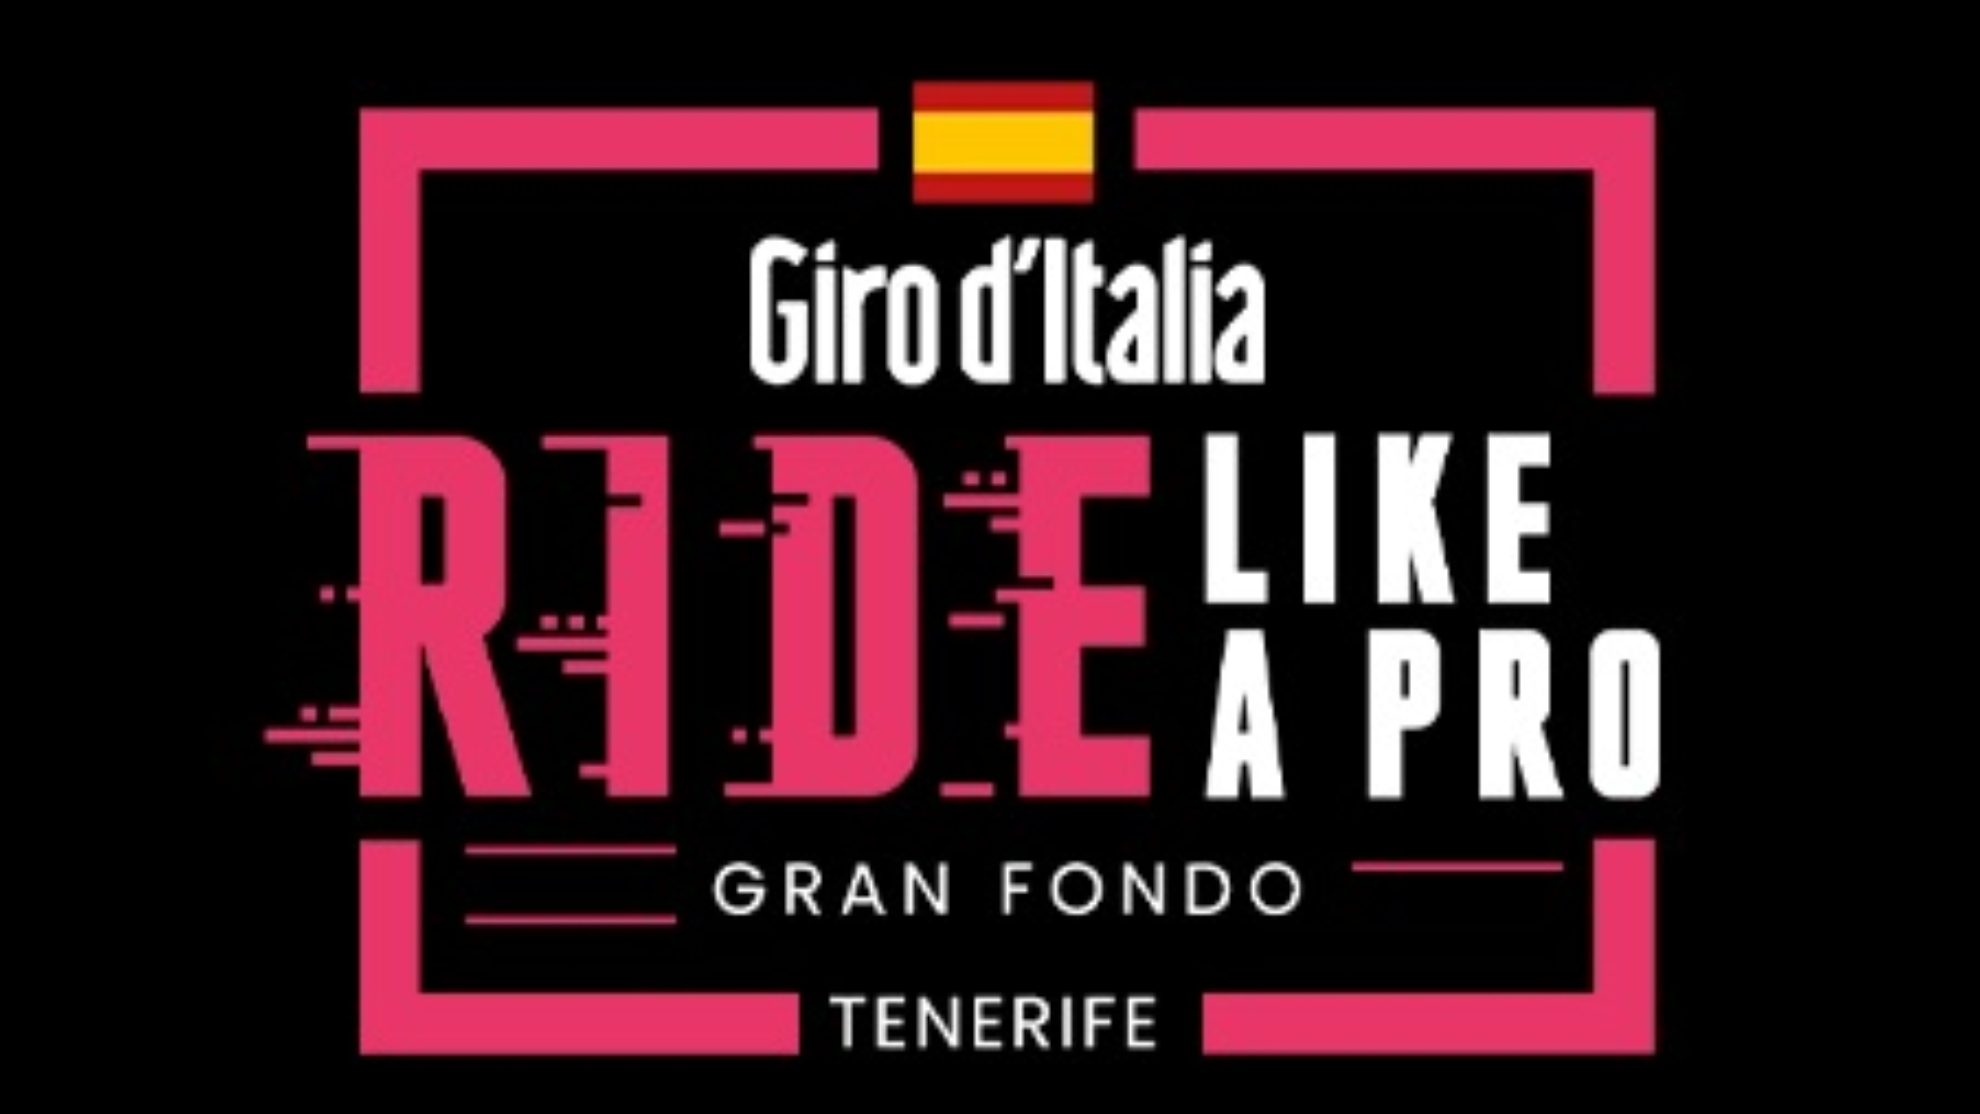 Llega a España por primera vez la Gran Fondo del Giro dItalia Ride Like a Pro a Tenerife